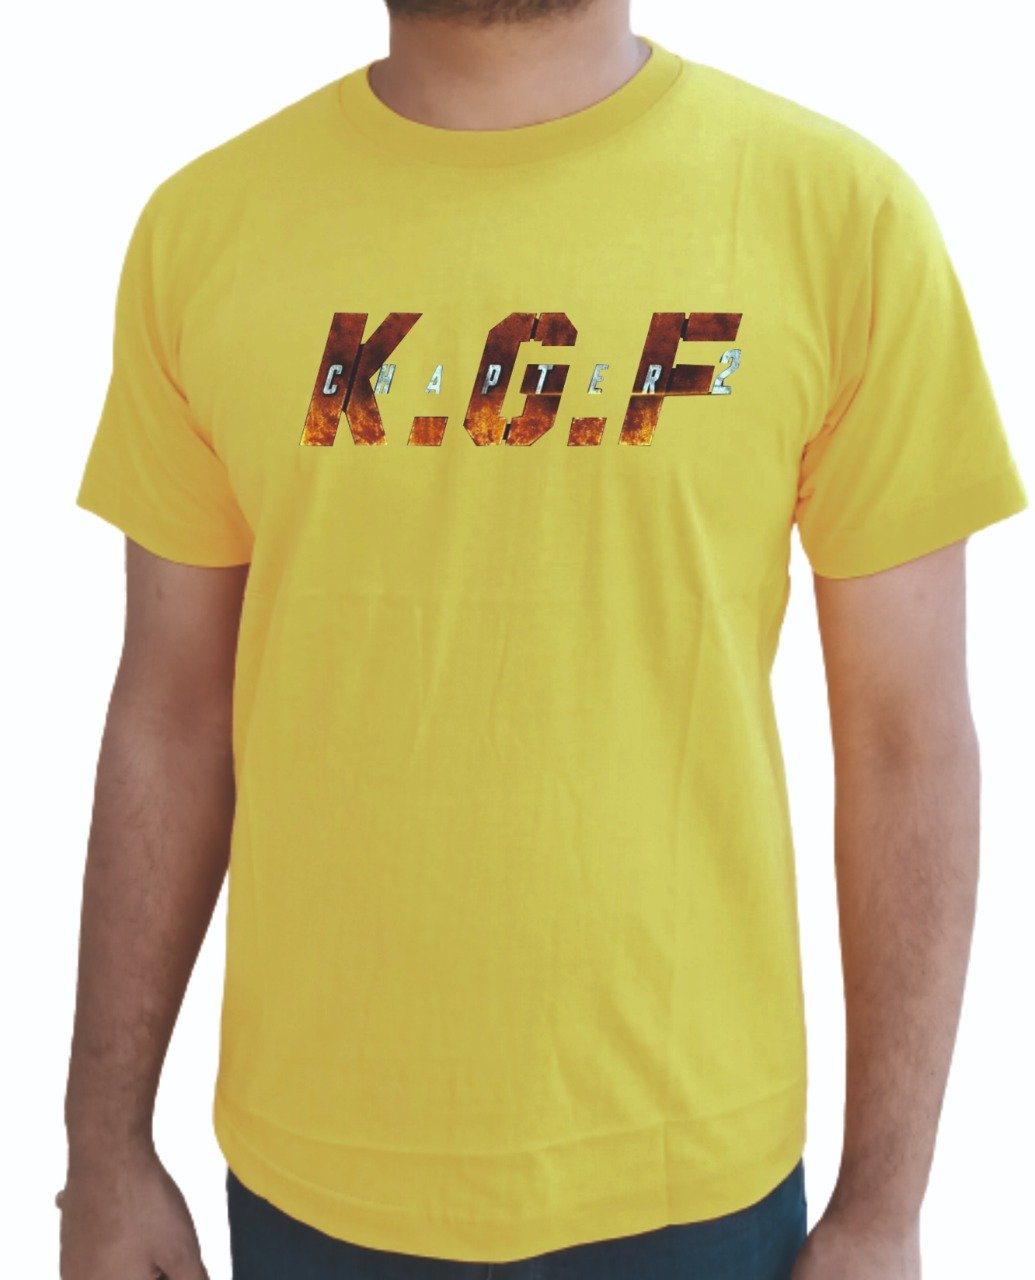 KGF 2 Printed Half Sleeve T-shirt for Men 100% Cotton